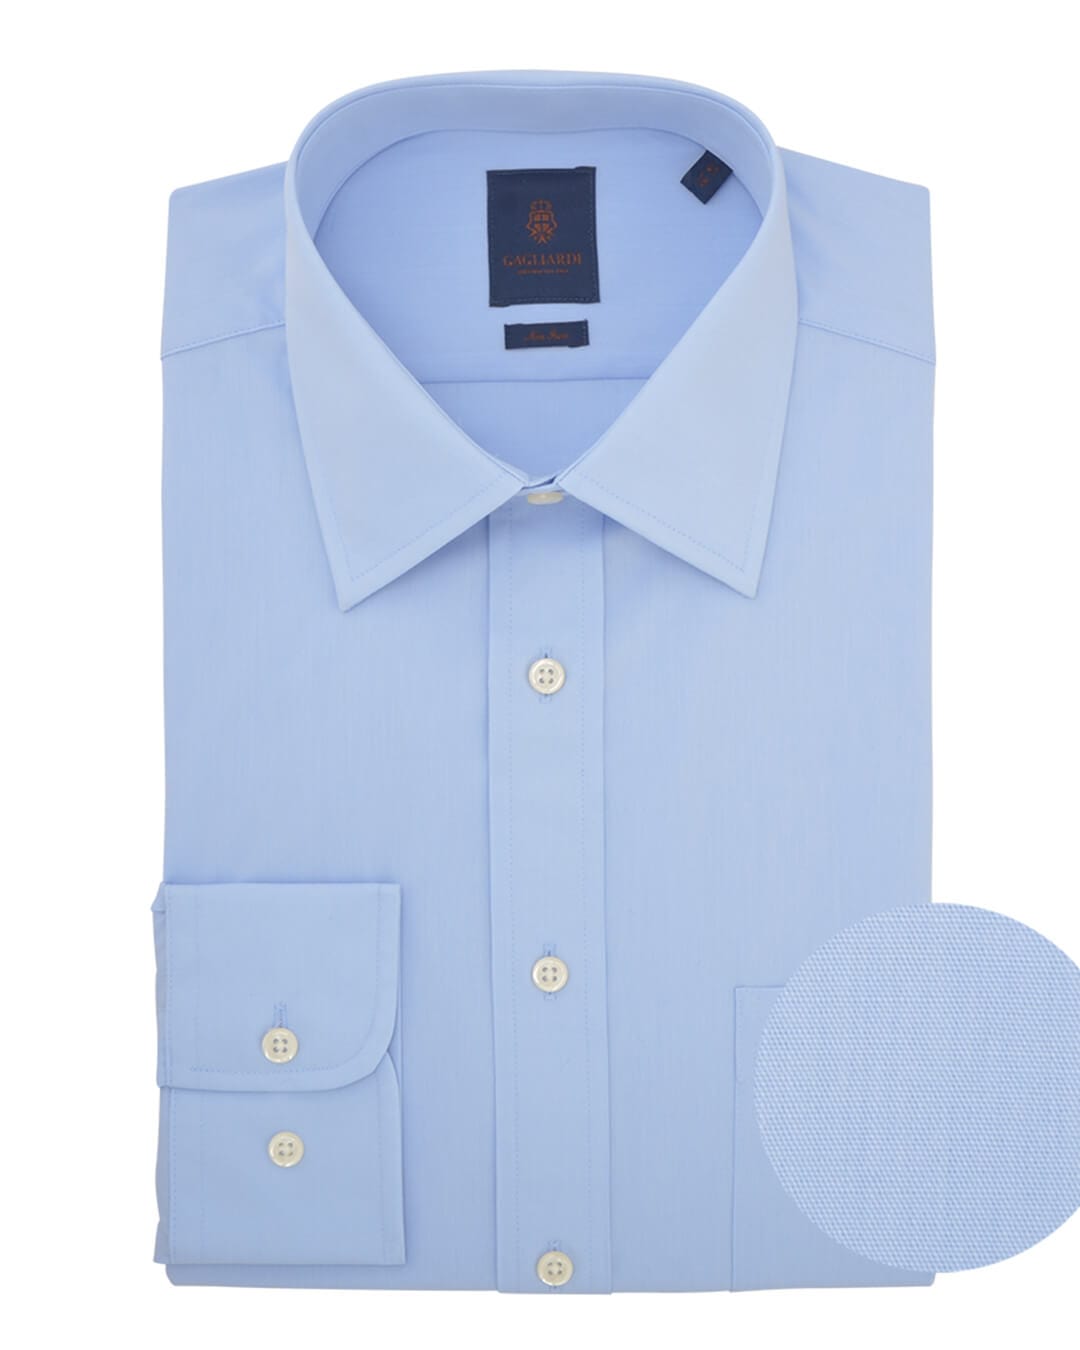 Gagliardi Shirts Gagliardi Tailored Fit Sky Poplin Classic Collar Non-iron Shirt